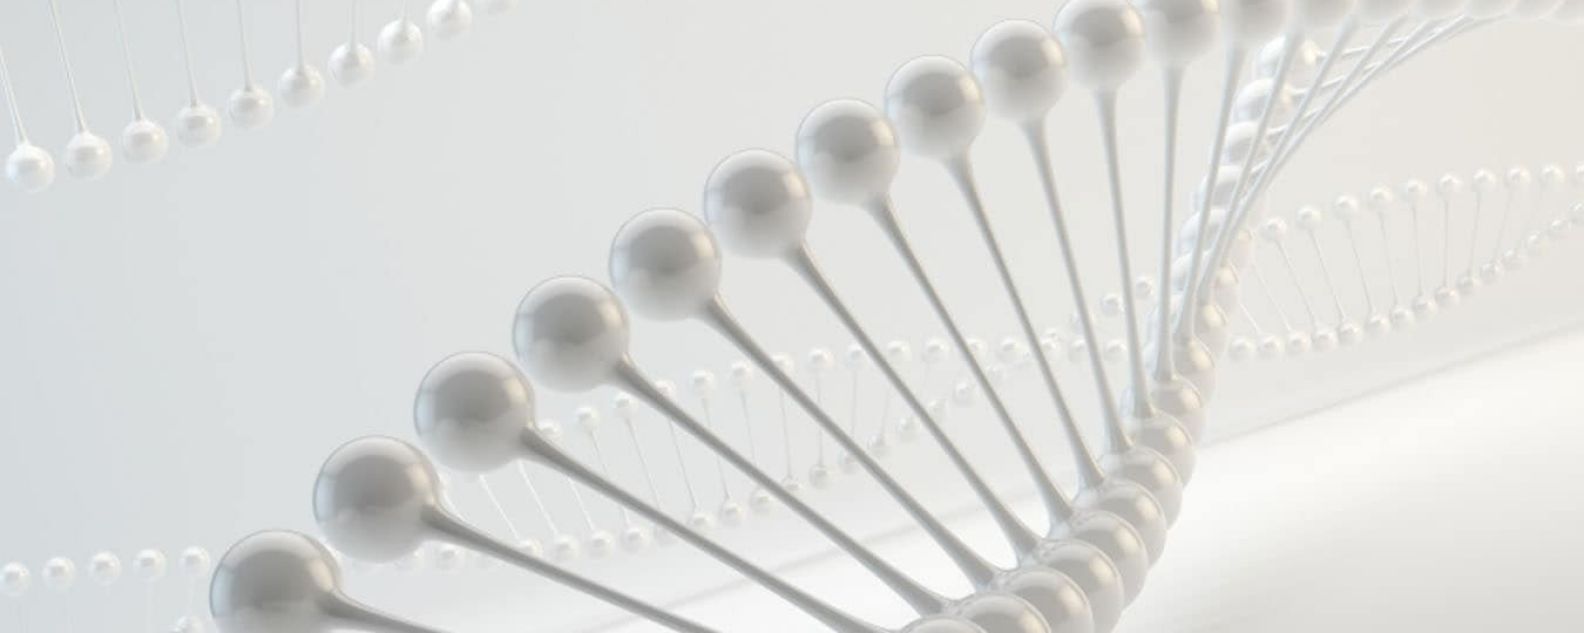 3D glass DNA strands against gray background